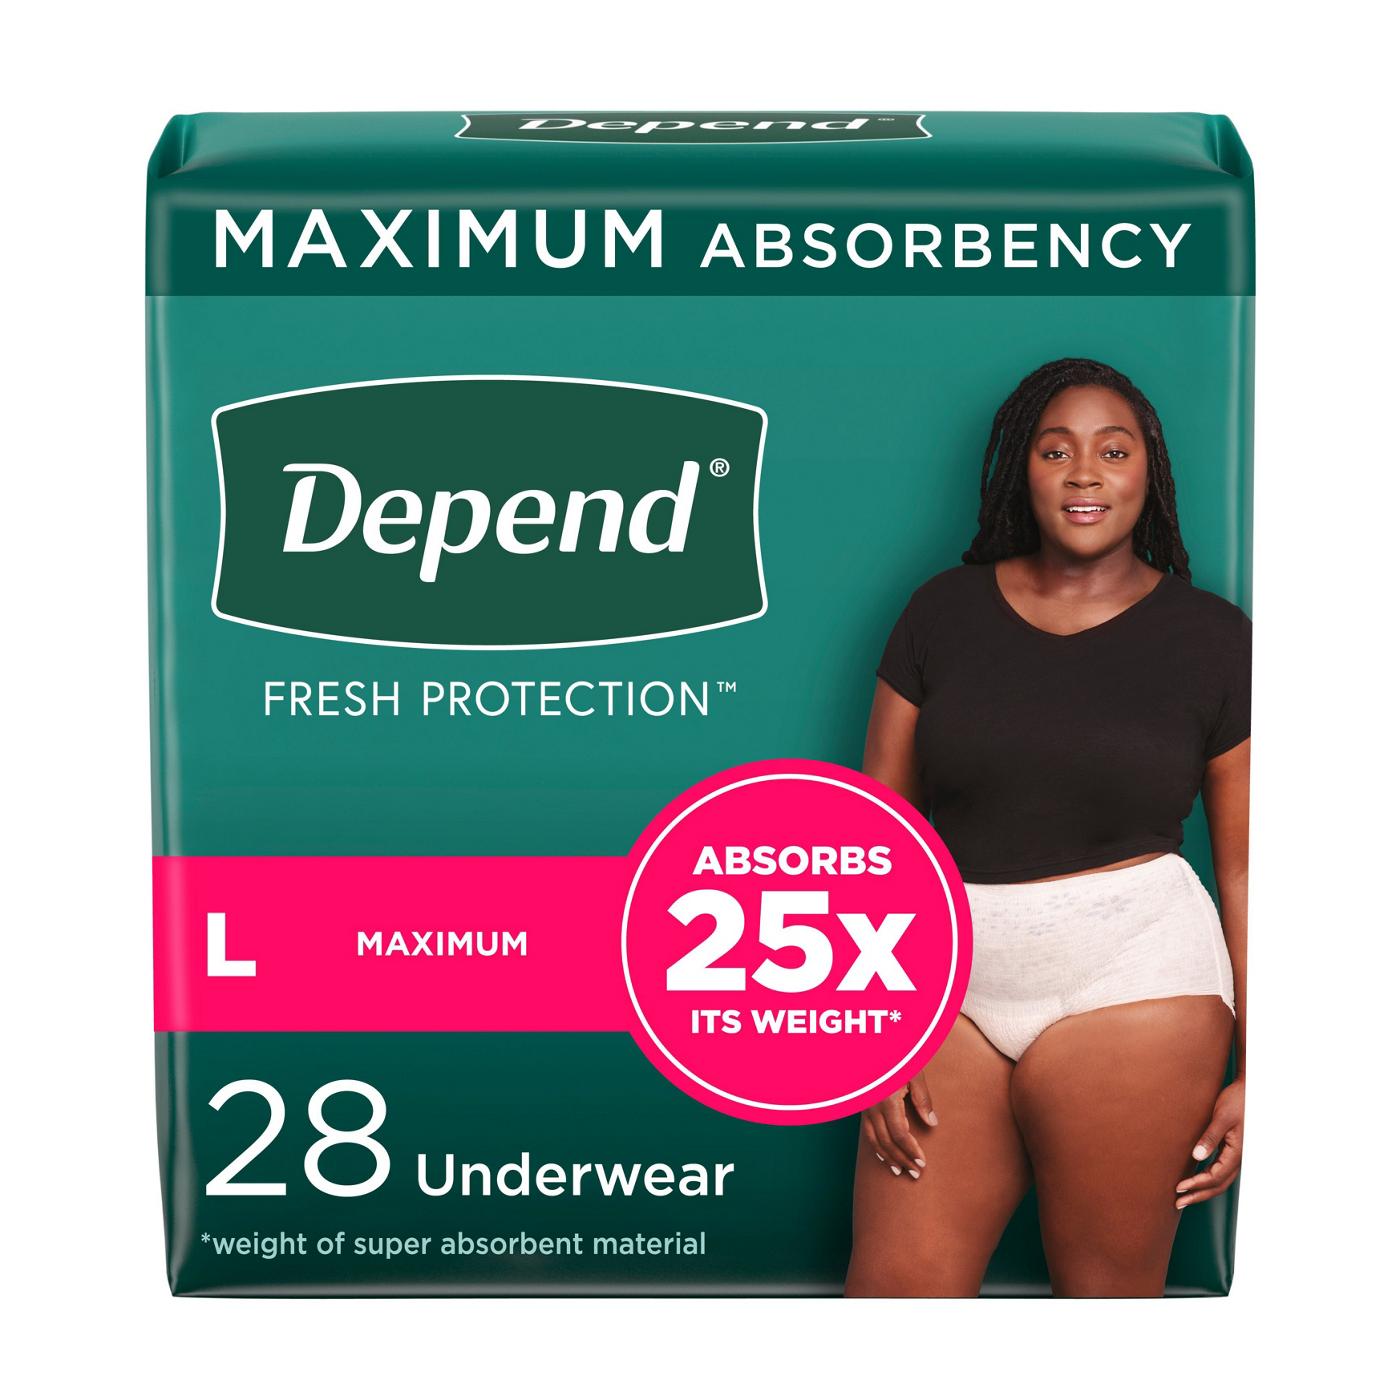 Tena® Men™ Super Plus Leakage Protection M/L Protective Underwear